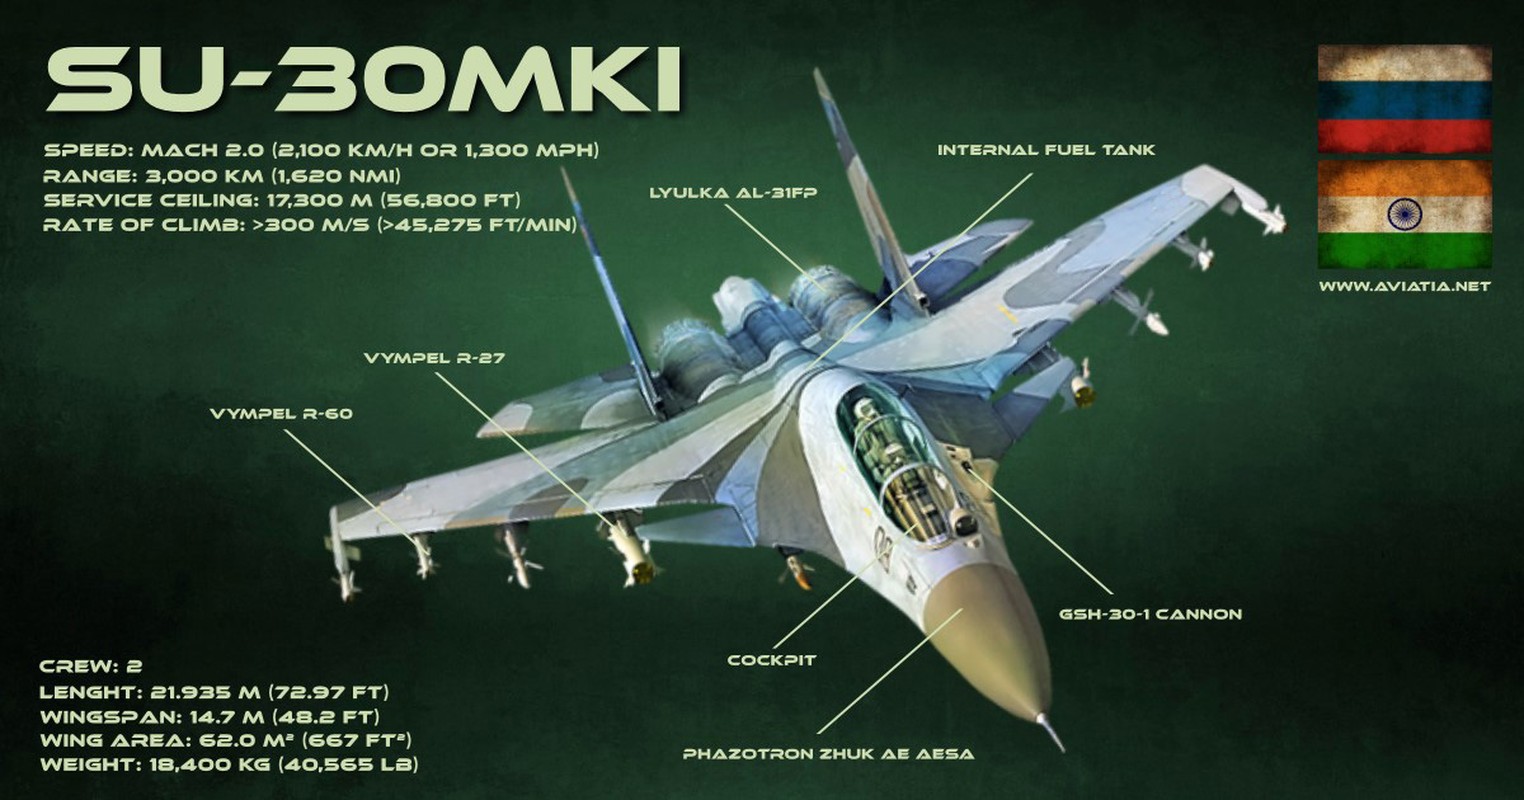 Tranh cai trong khong quan An Do: Rafale hay Su-30MKI manh hon?-Hinh-7